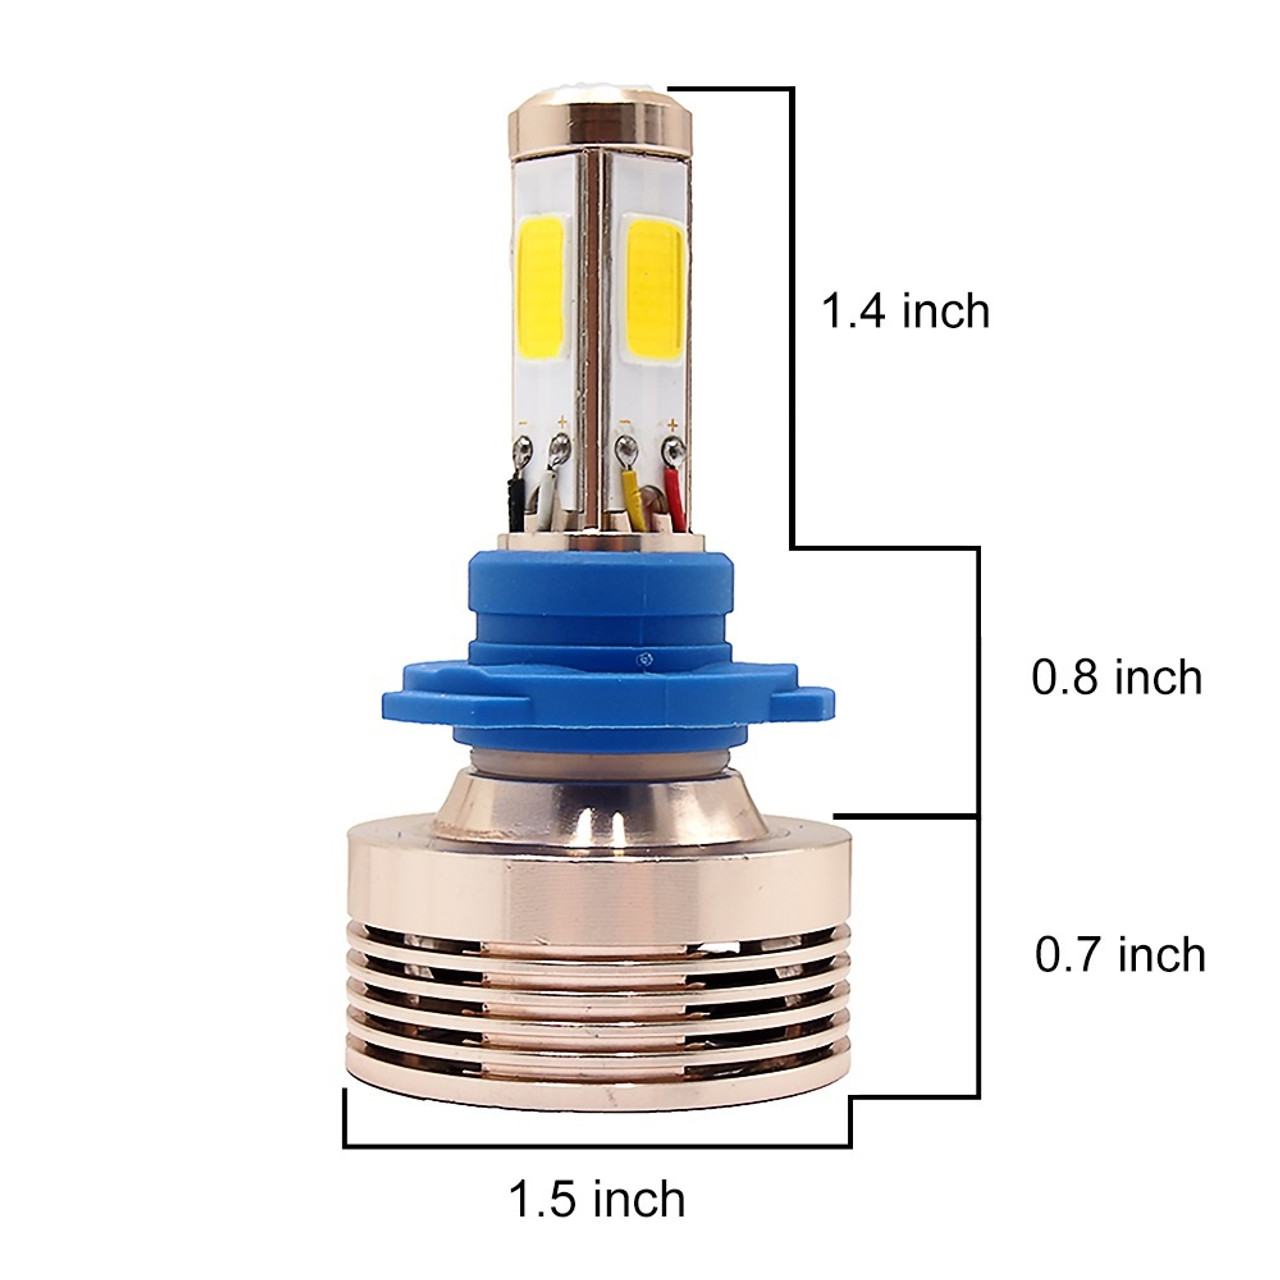 Projector Compliant 9005 4-Sided Plug-N-Play LED Headlight Kit 2,500 LUX 6,000 Lumens w/ OEM Kelvin Color Race Sport Lighting